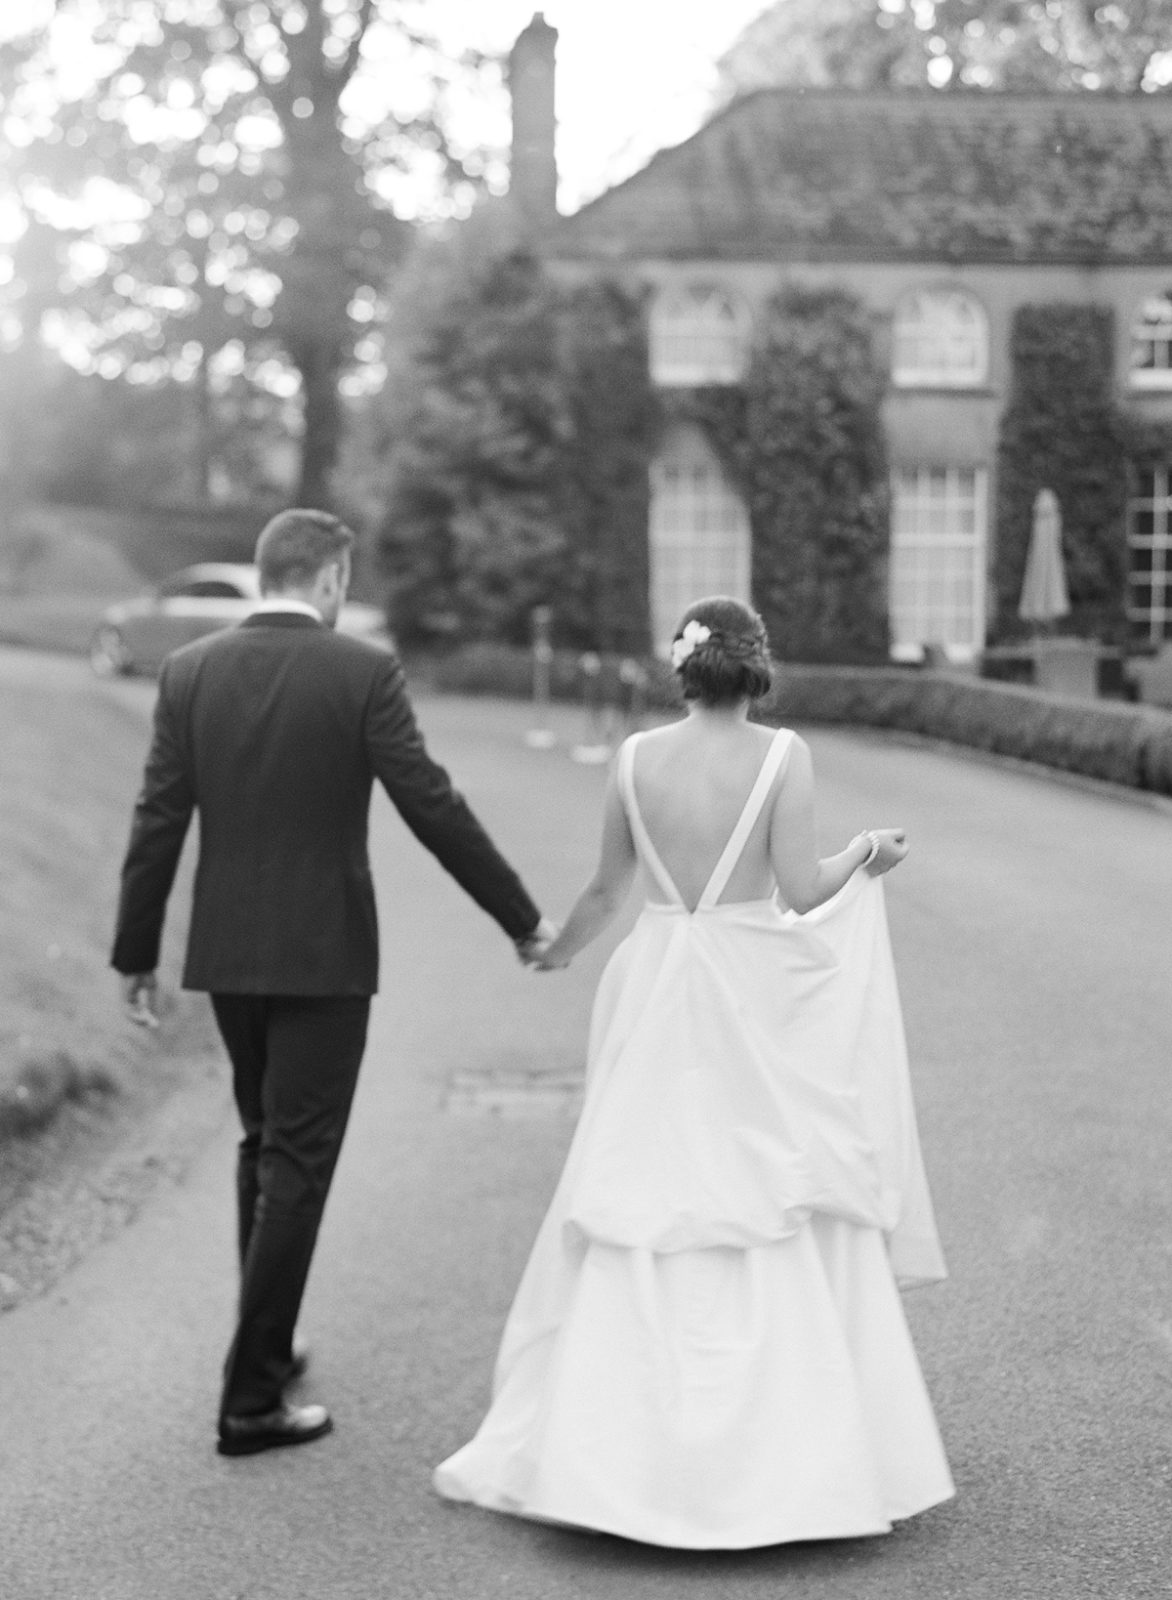 Mount Juliet Estate Wedding Photographer | Ireland Destination Wedding | Molly Carr Photography | Europe Film Photographer | Waterlily Weddings | Bride and Groom